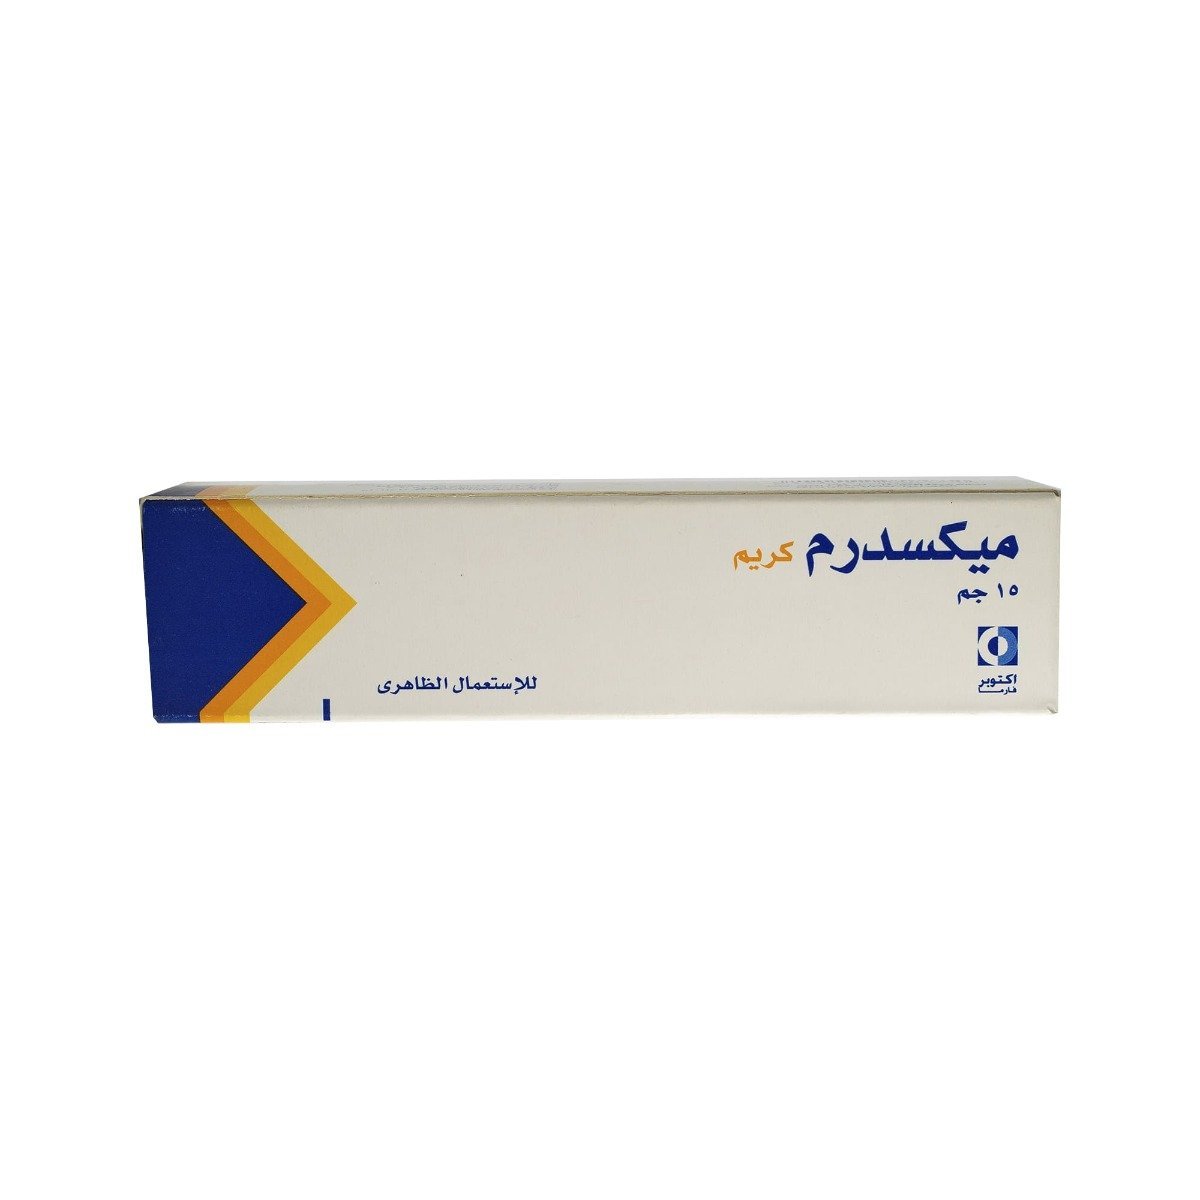 Mixderm Cream - 15 gm - Bloom Pharmacy